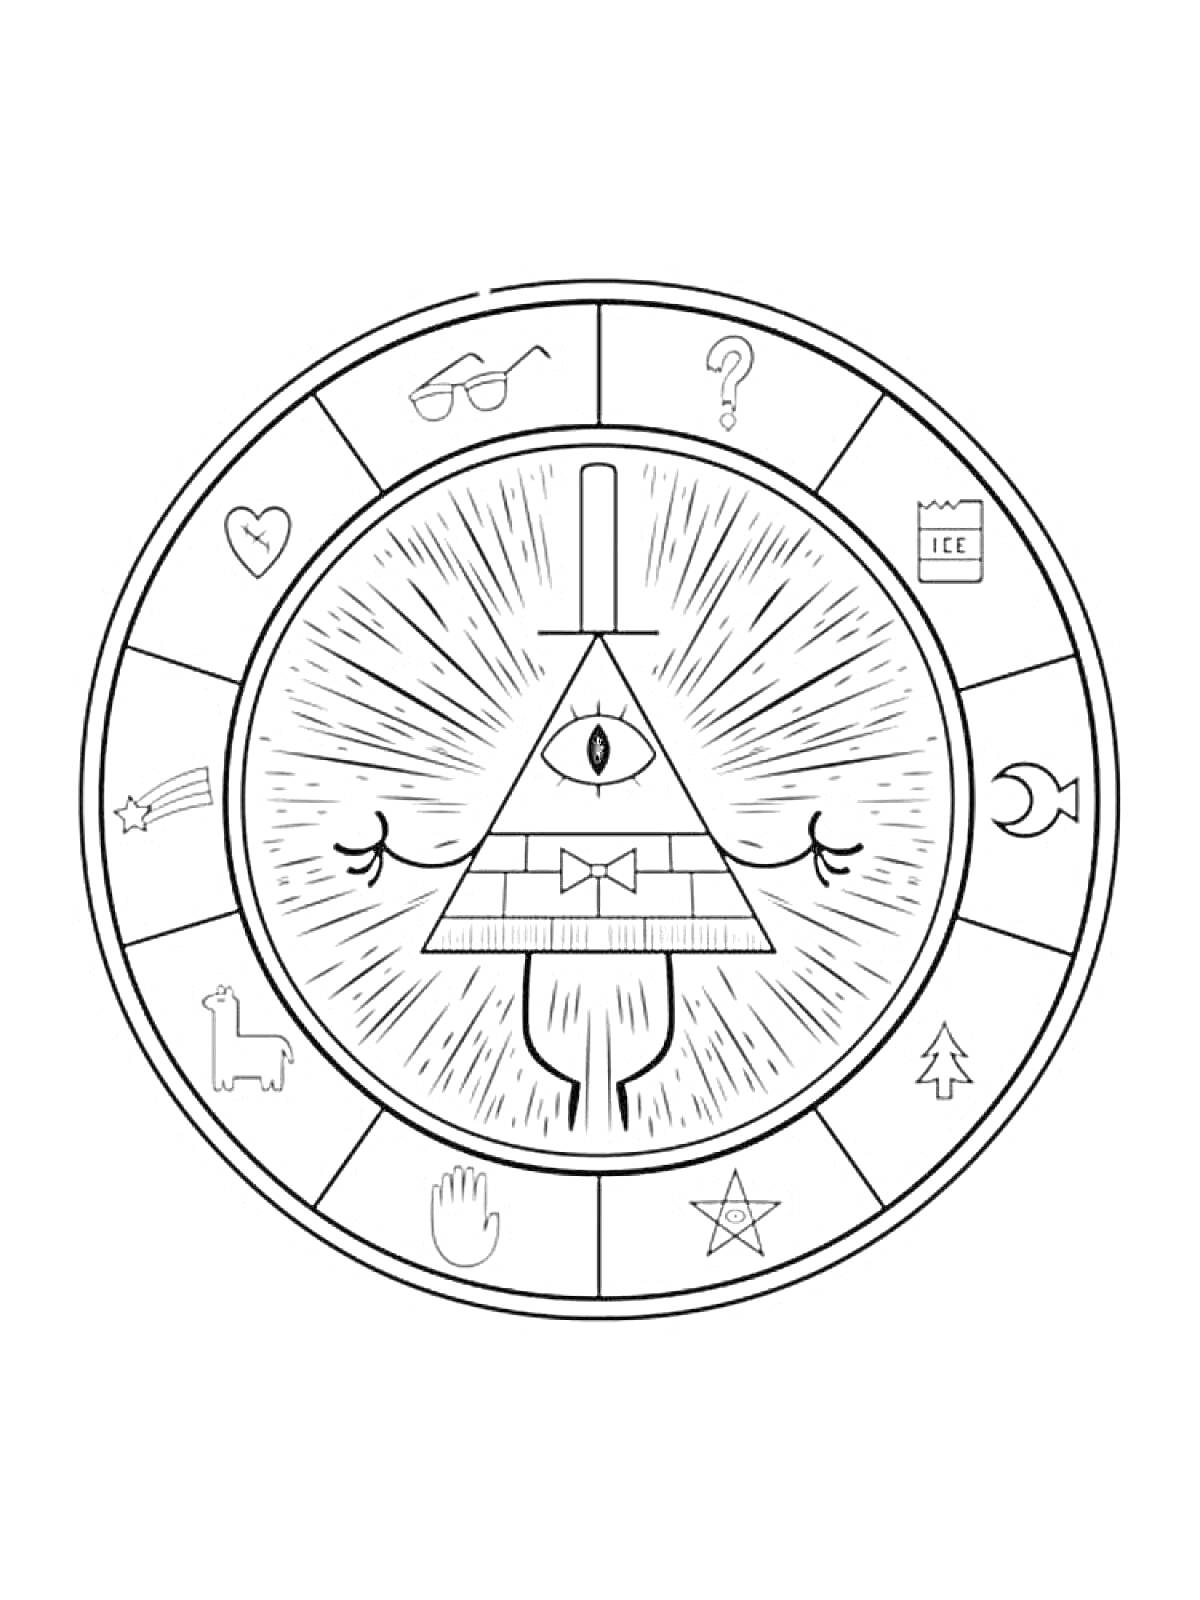 Билл Шифр с символами: очки, знак вопроса, чашка, месяц, елка, звезда, рука, лама, сердечко, падающая звезда